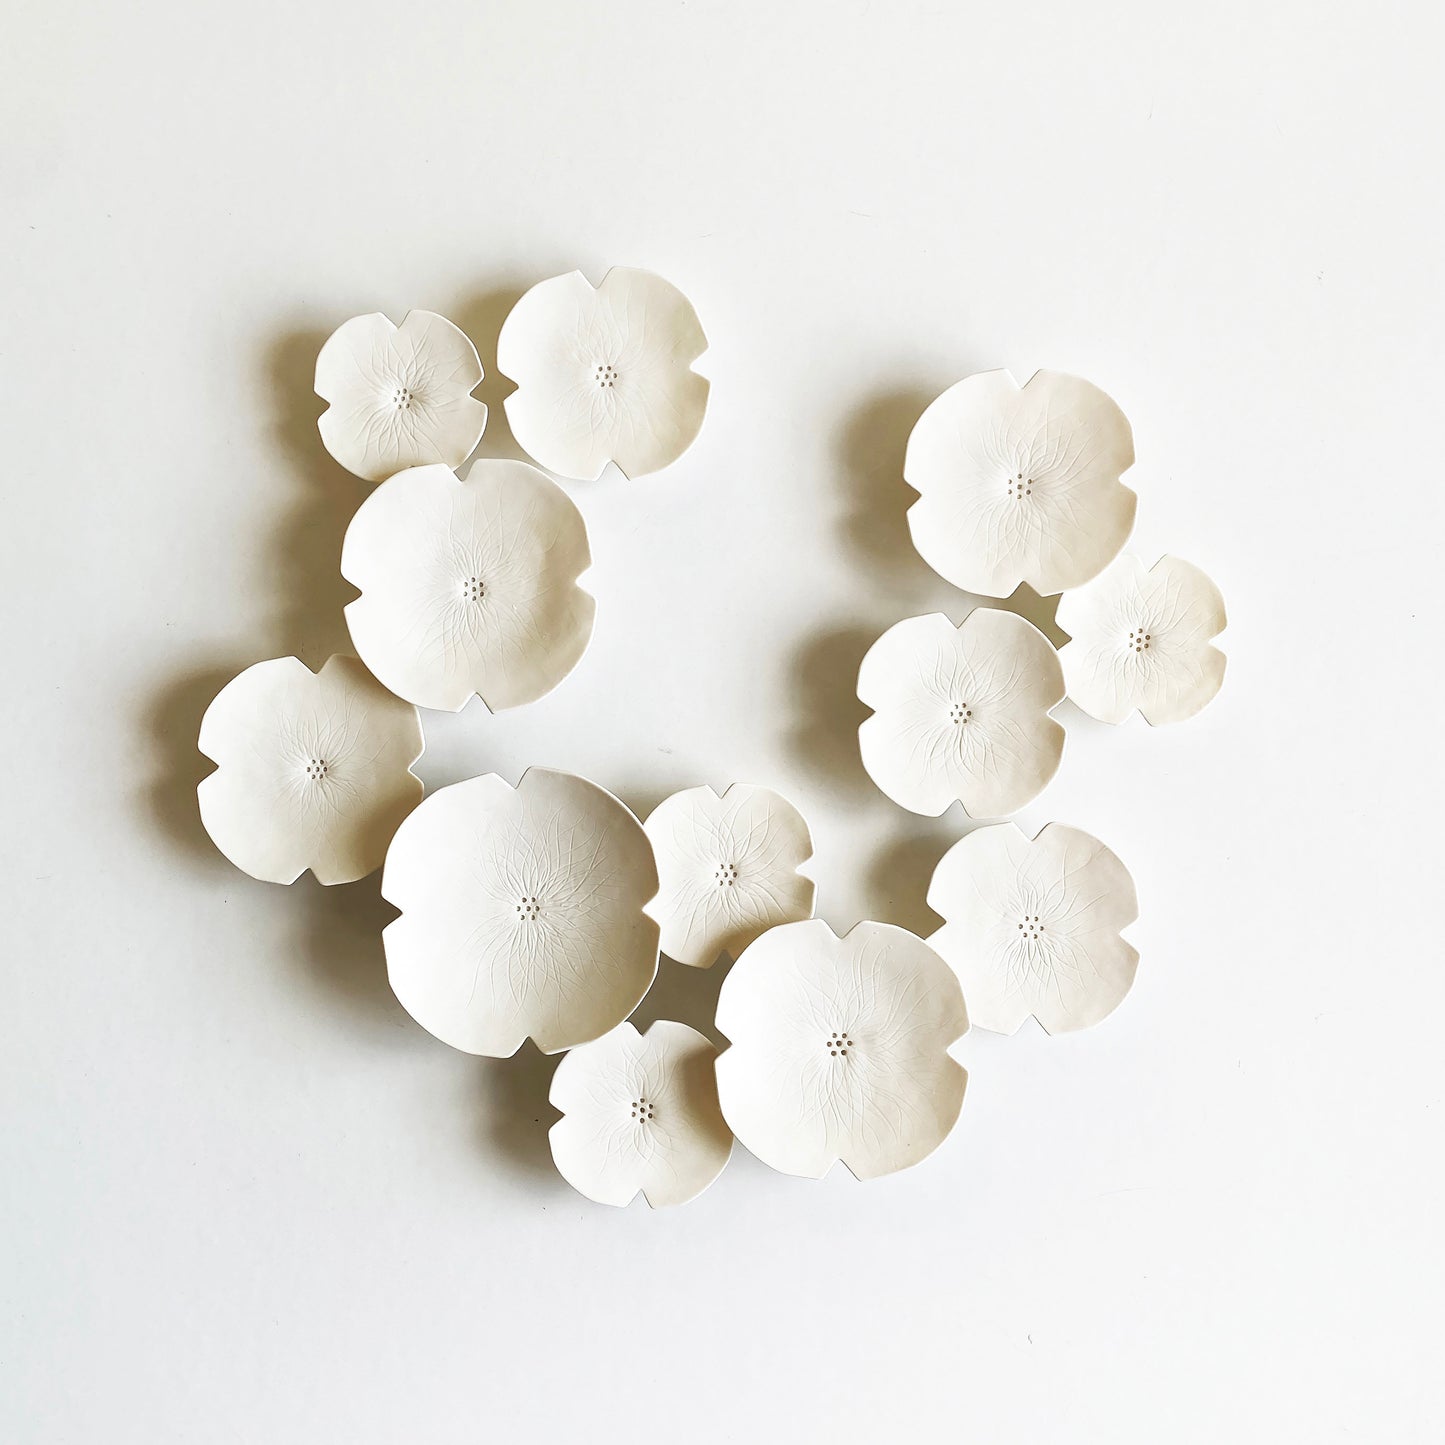 Extra Large wall art set - 12 Graces - Large Wall art sculpture 3D White ceramic flowers Porcelain Original artwork MADE TO ORDER